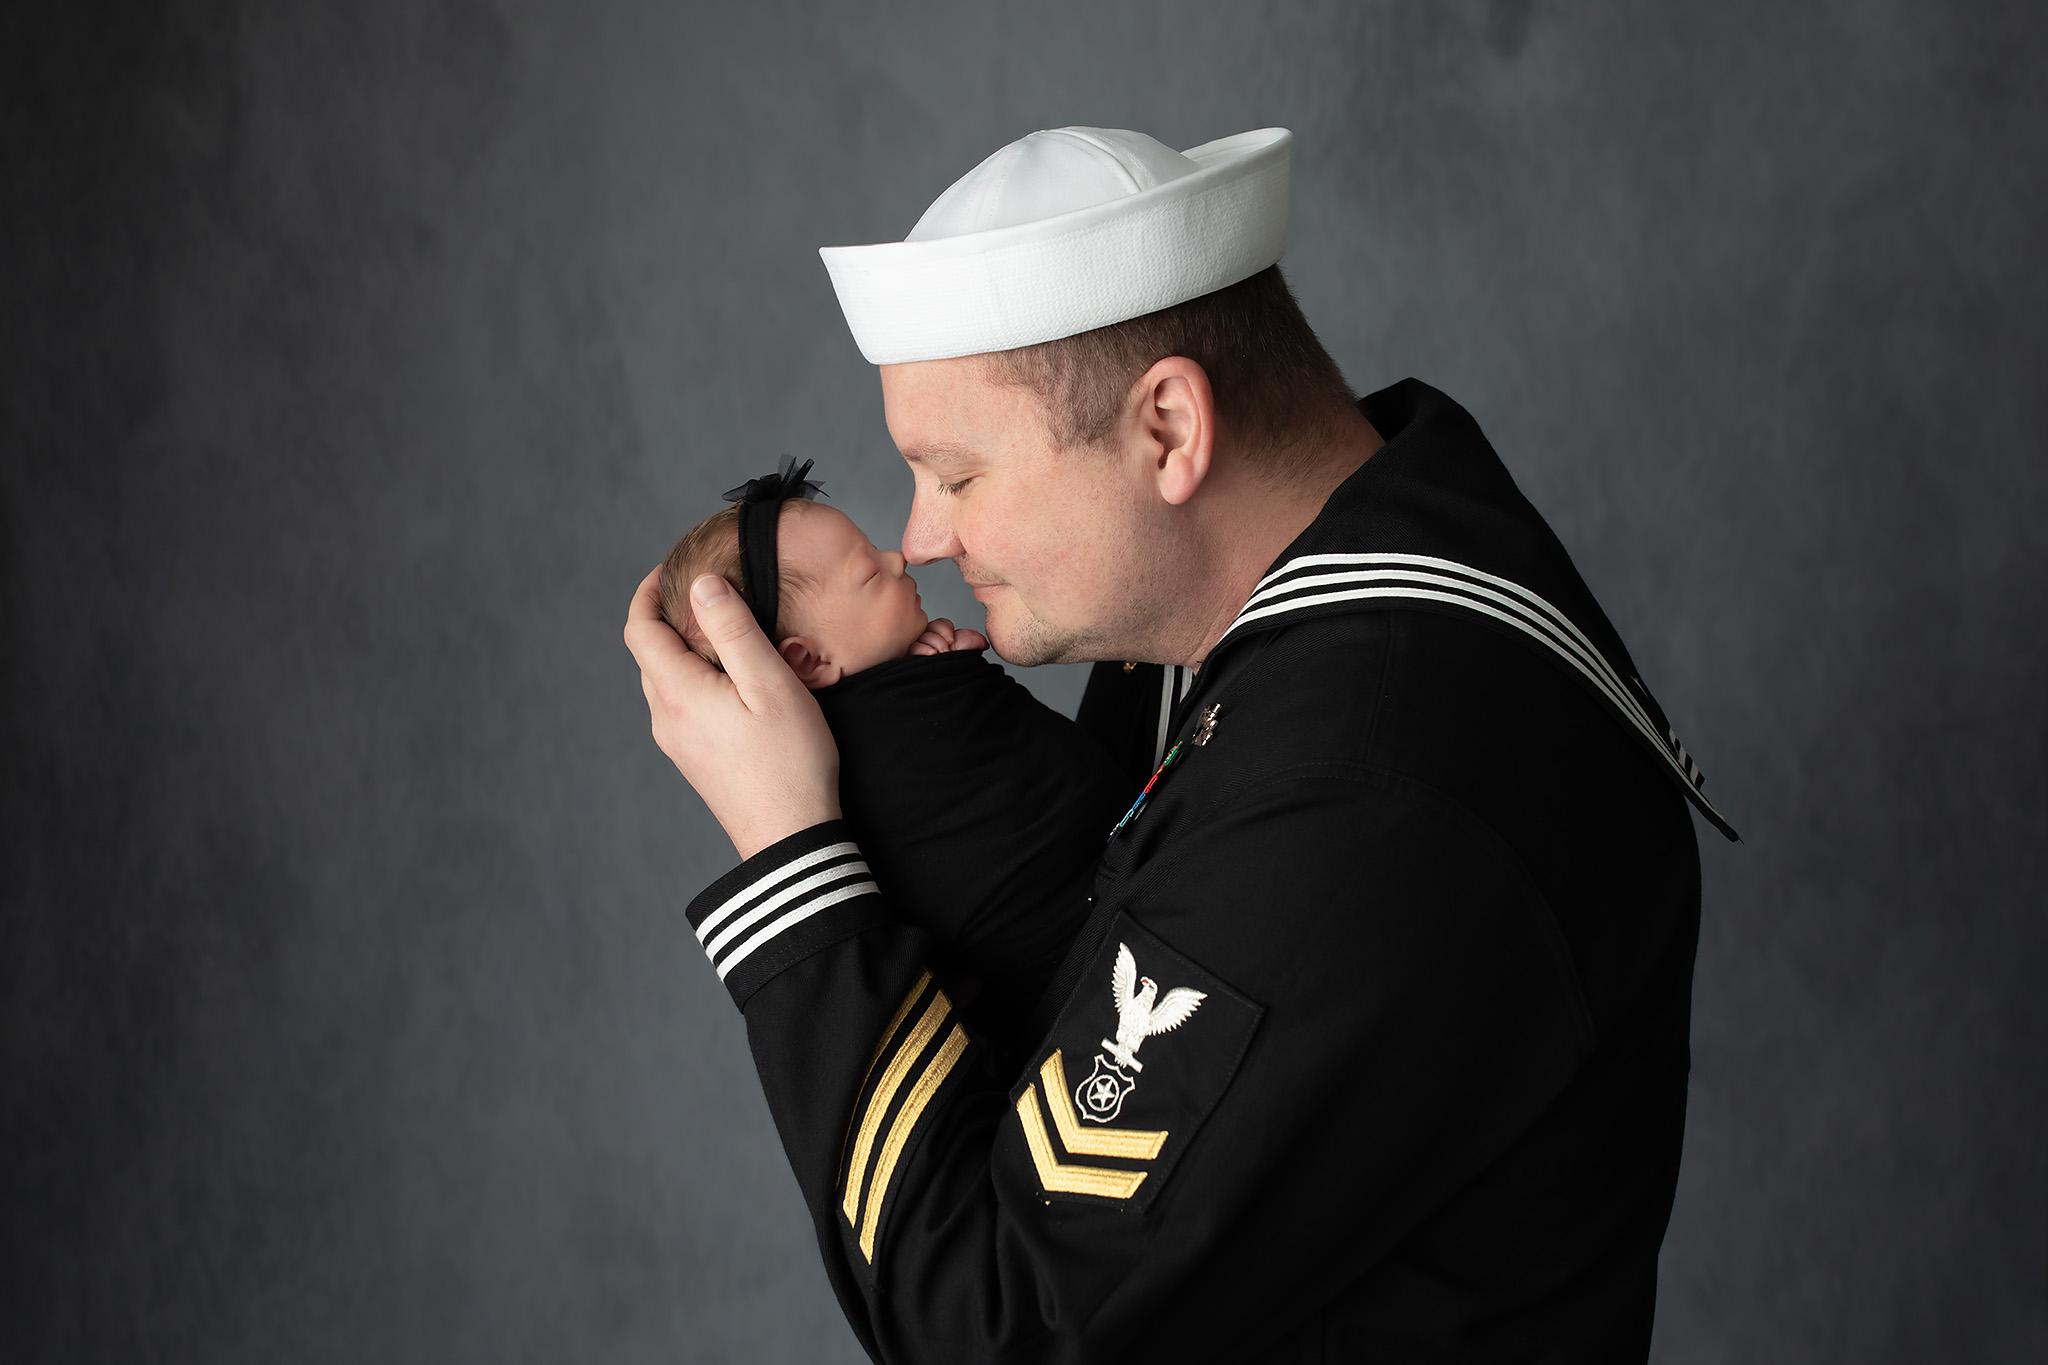 Newborn Photos with marine uniform